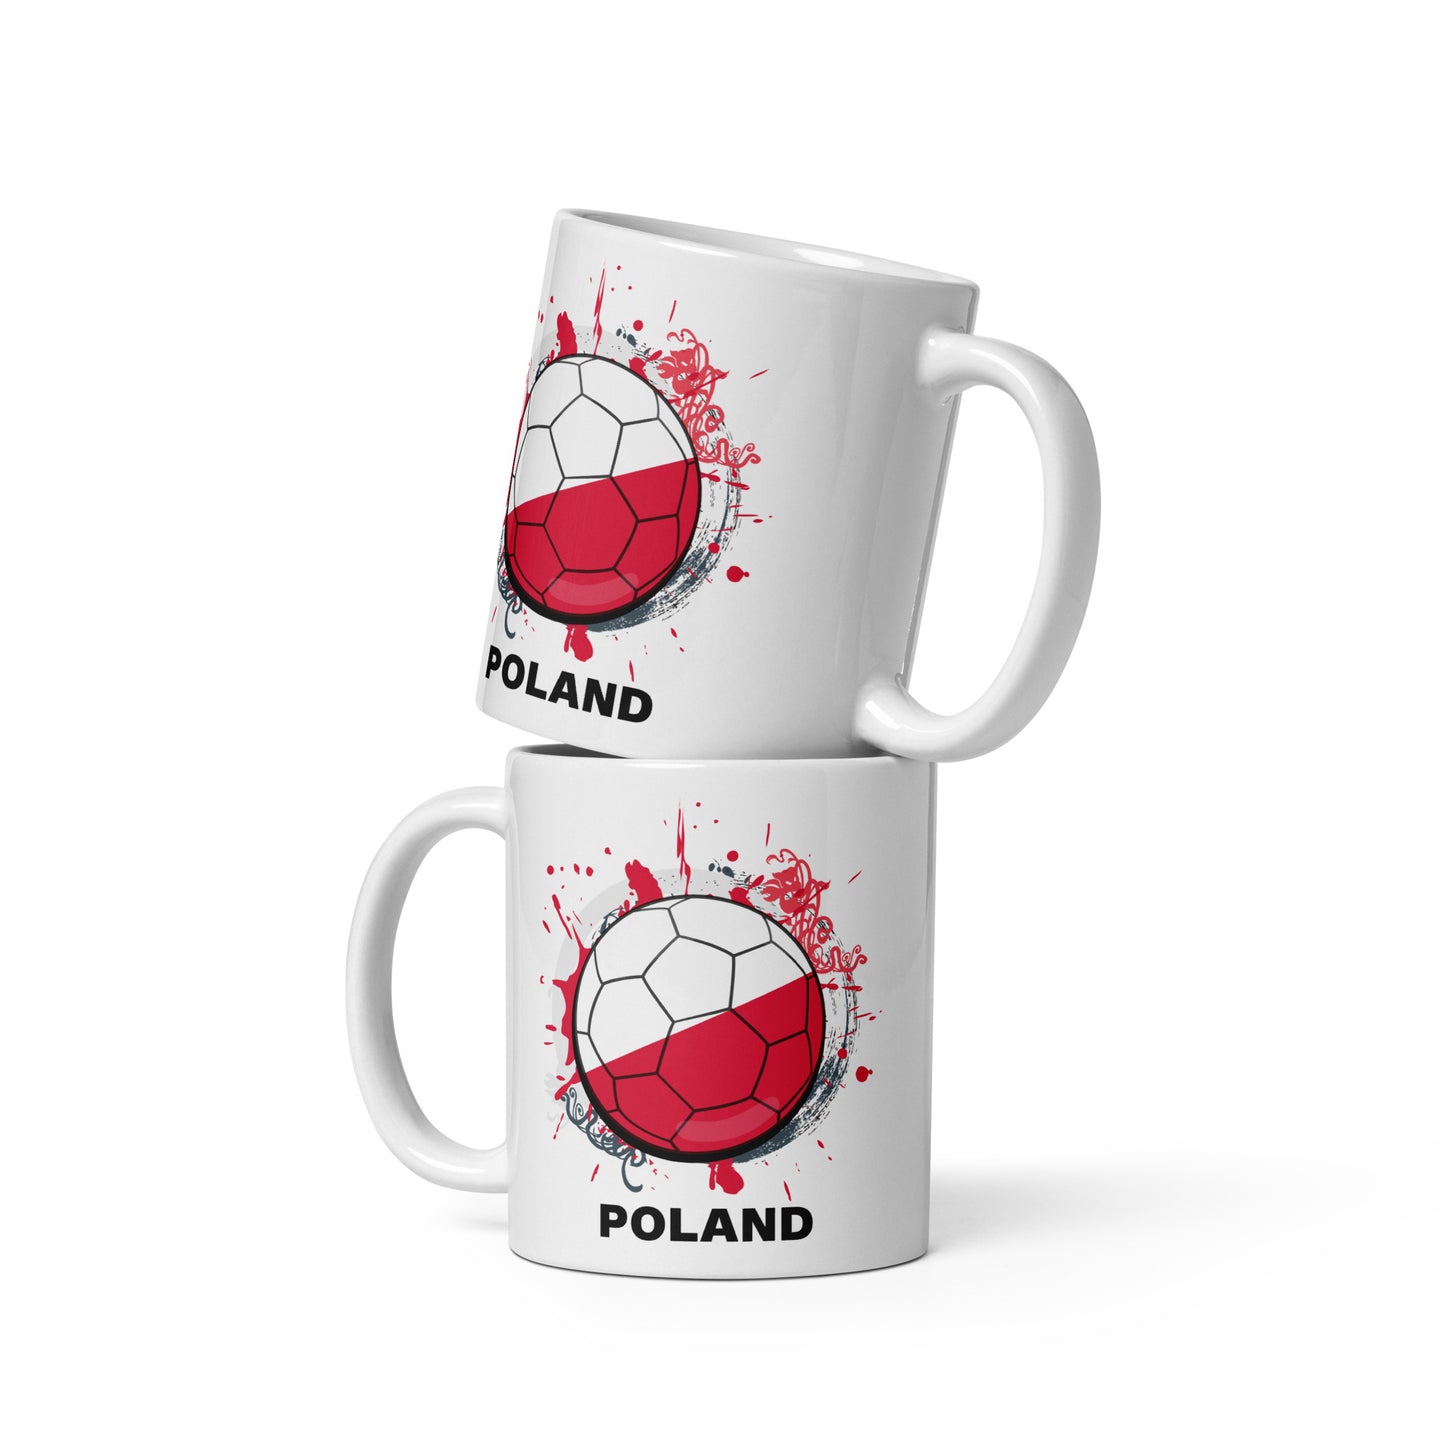 Poland Soccer - White glossy mug